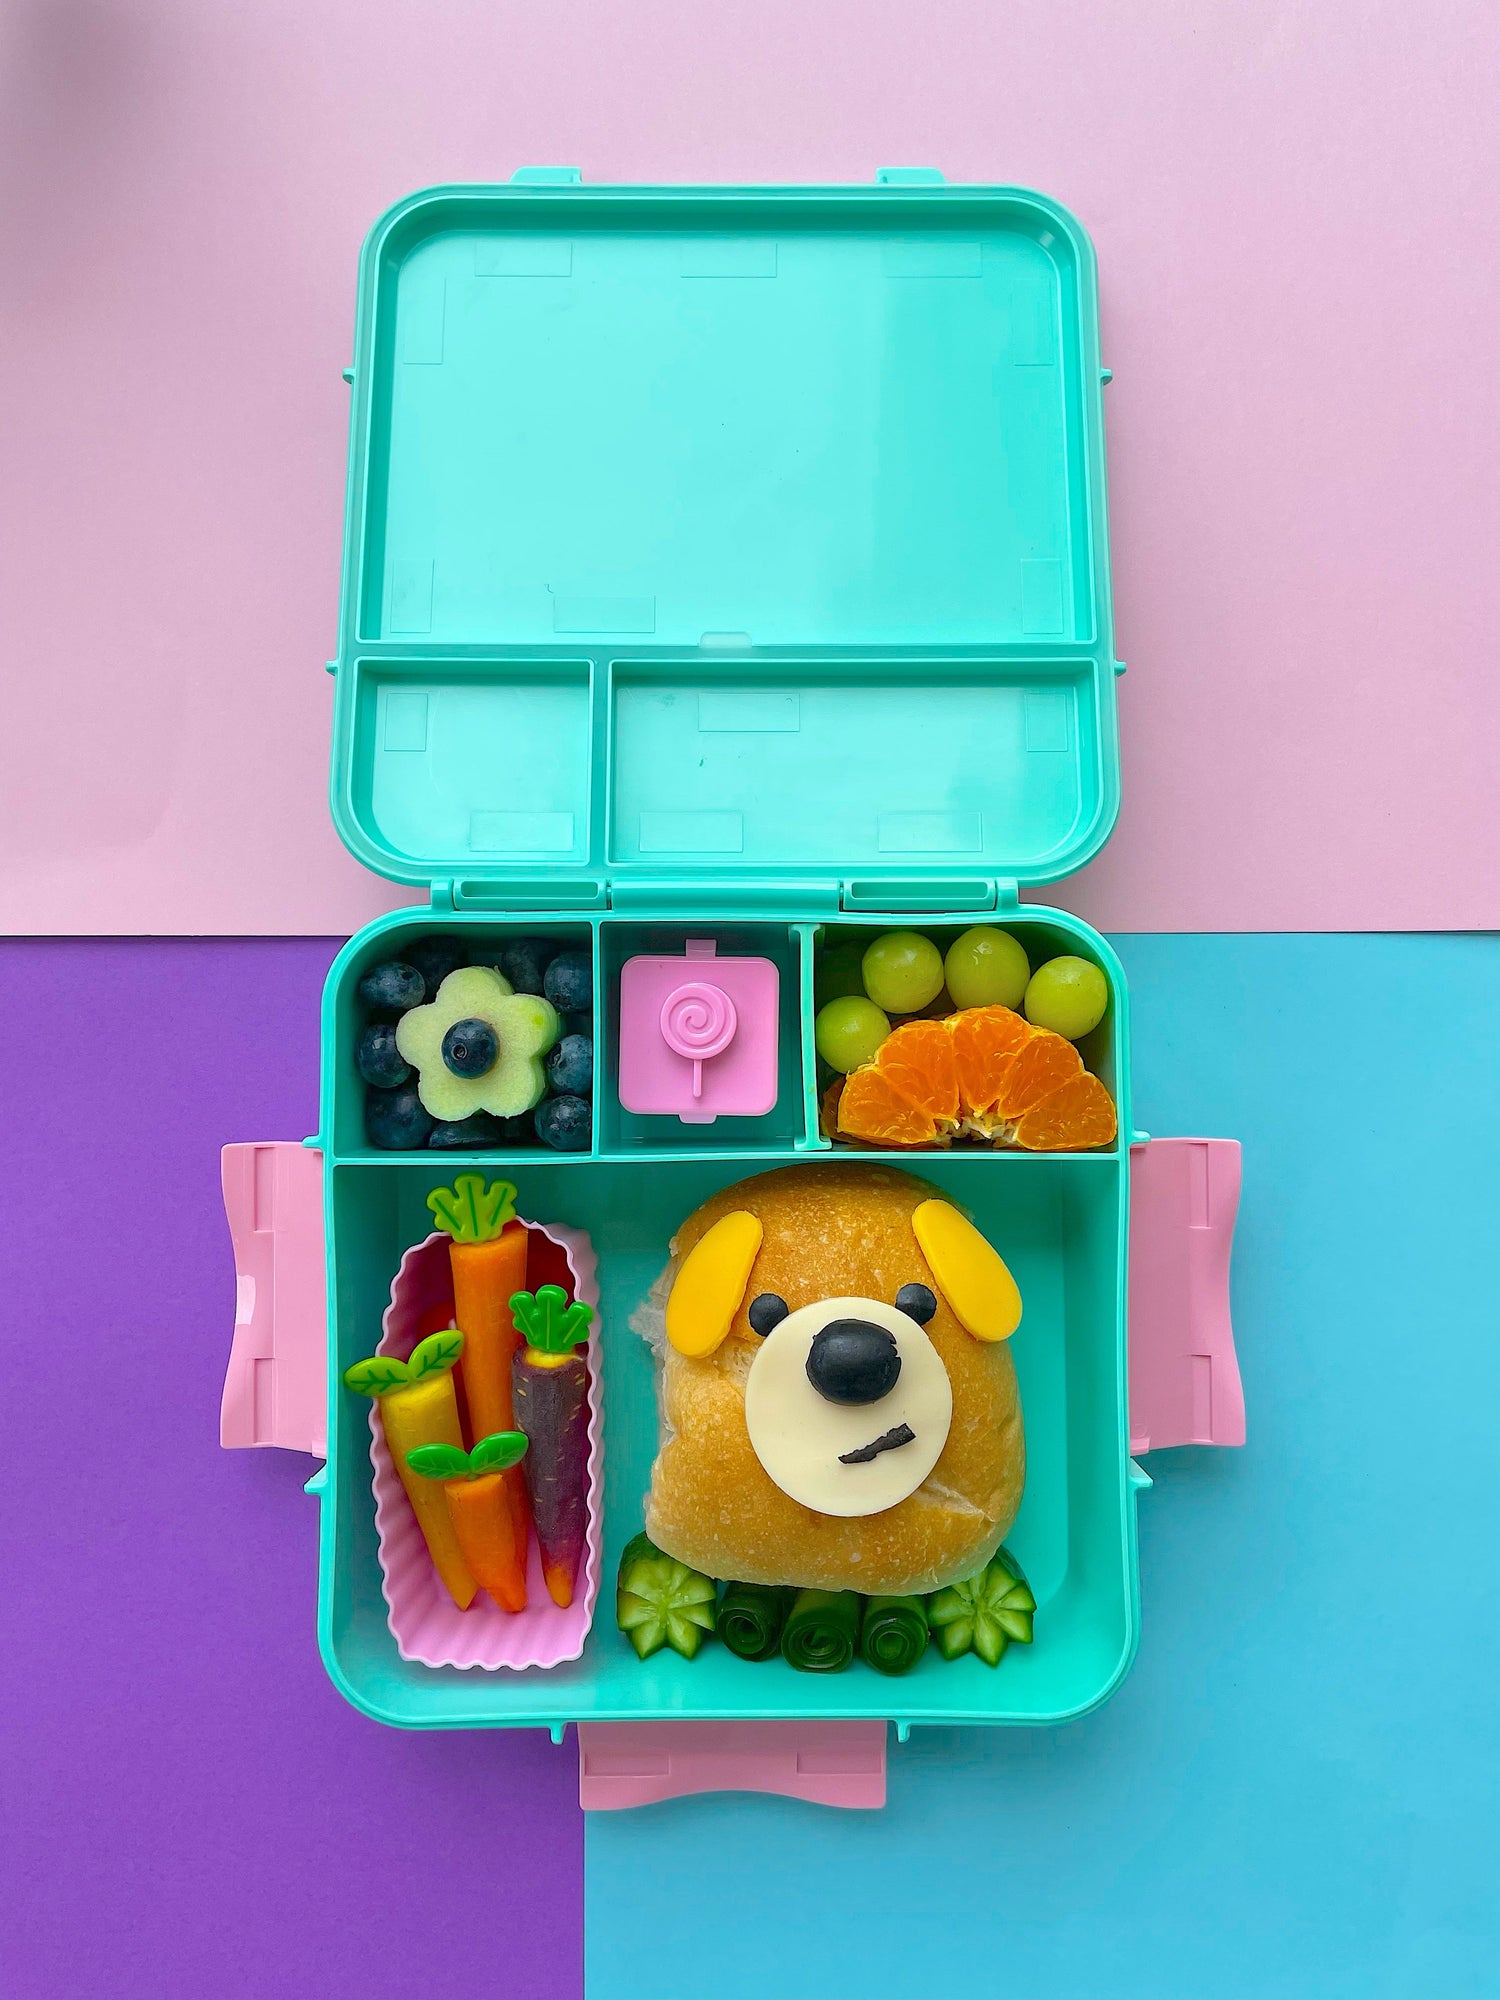 Lunch Box Enfant - Lunch&Co